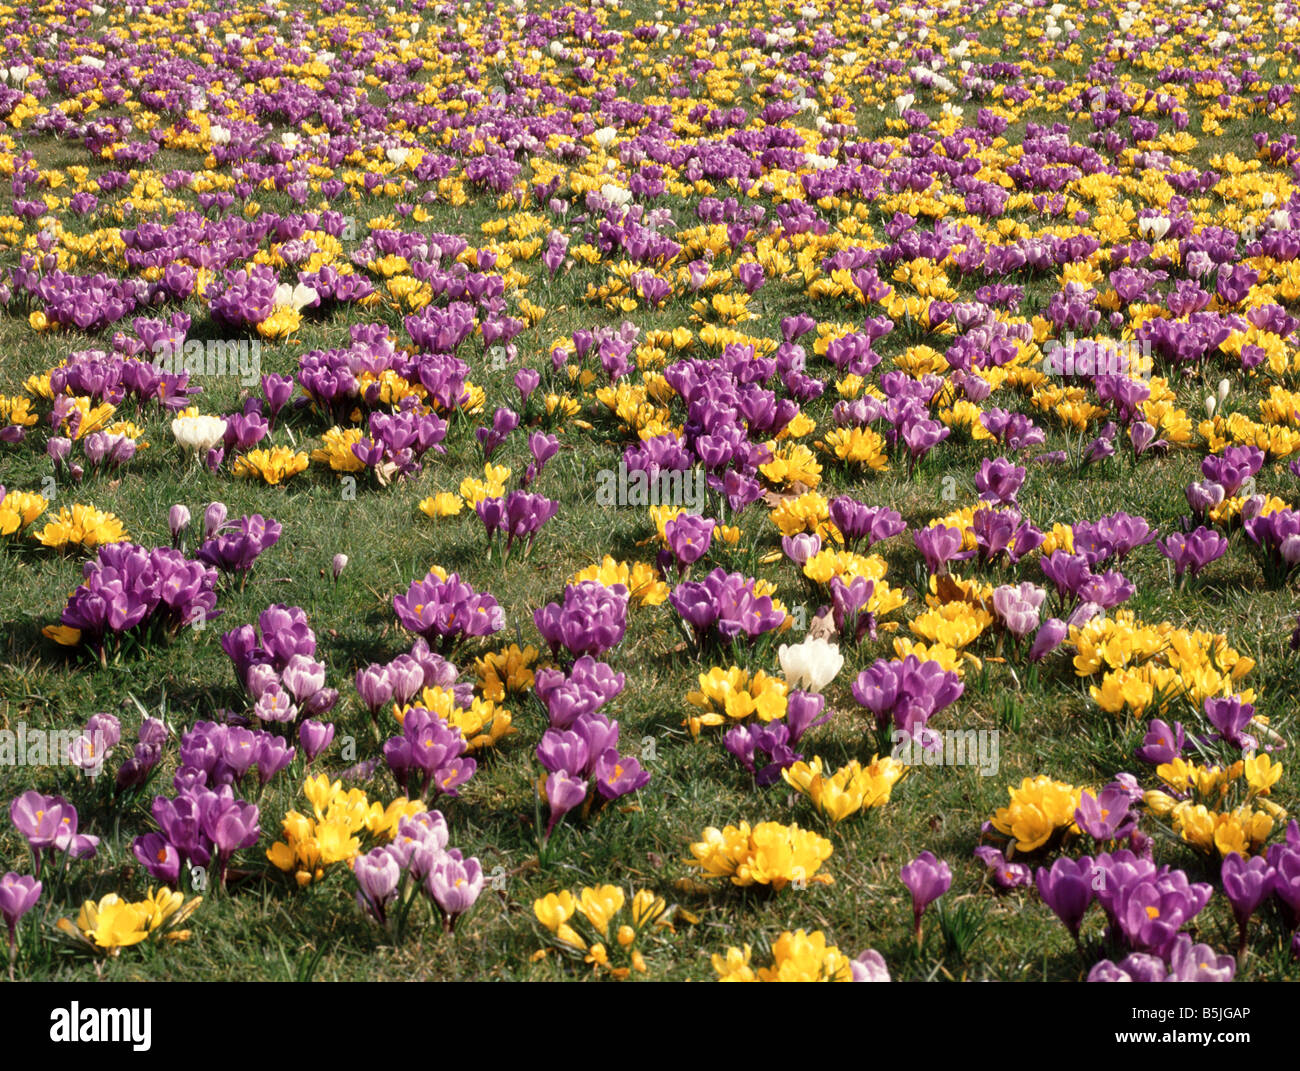 Mass planting of crocus bulbs in flower across grass lawn Stock Photo